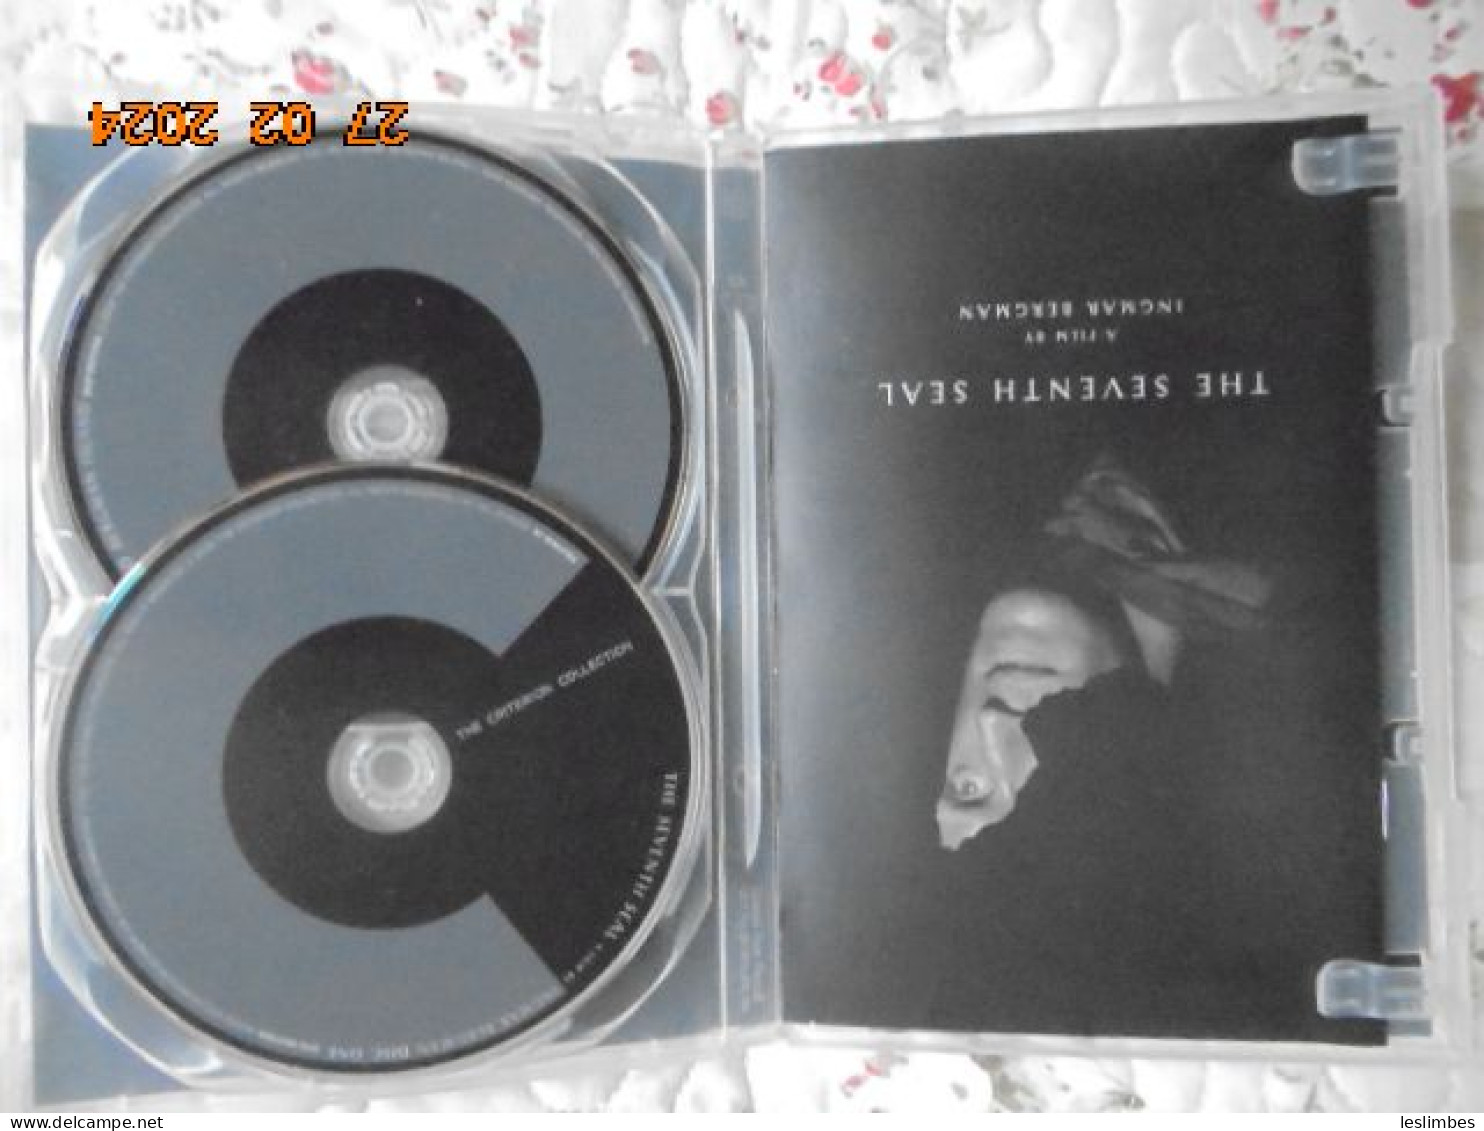 Seventh Seal (The Criterion Collection) -  [DVD] [Region 1] [US Import] [NTSC] Ingmar Bergman - Classic